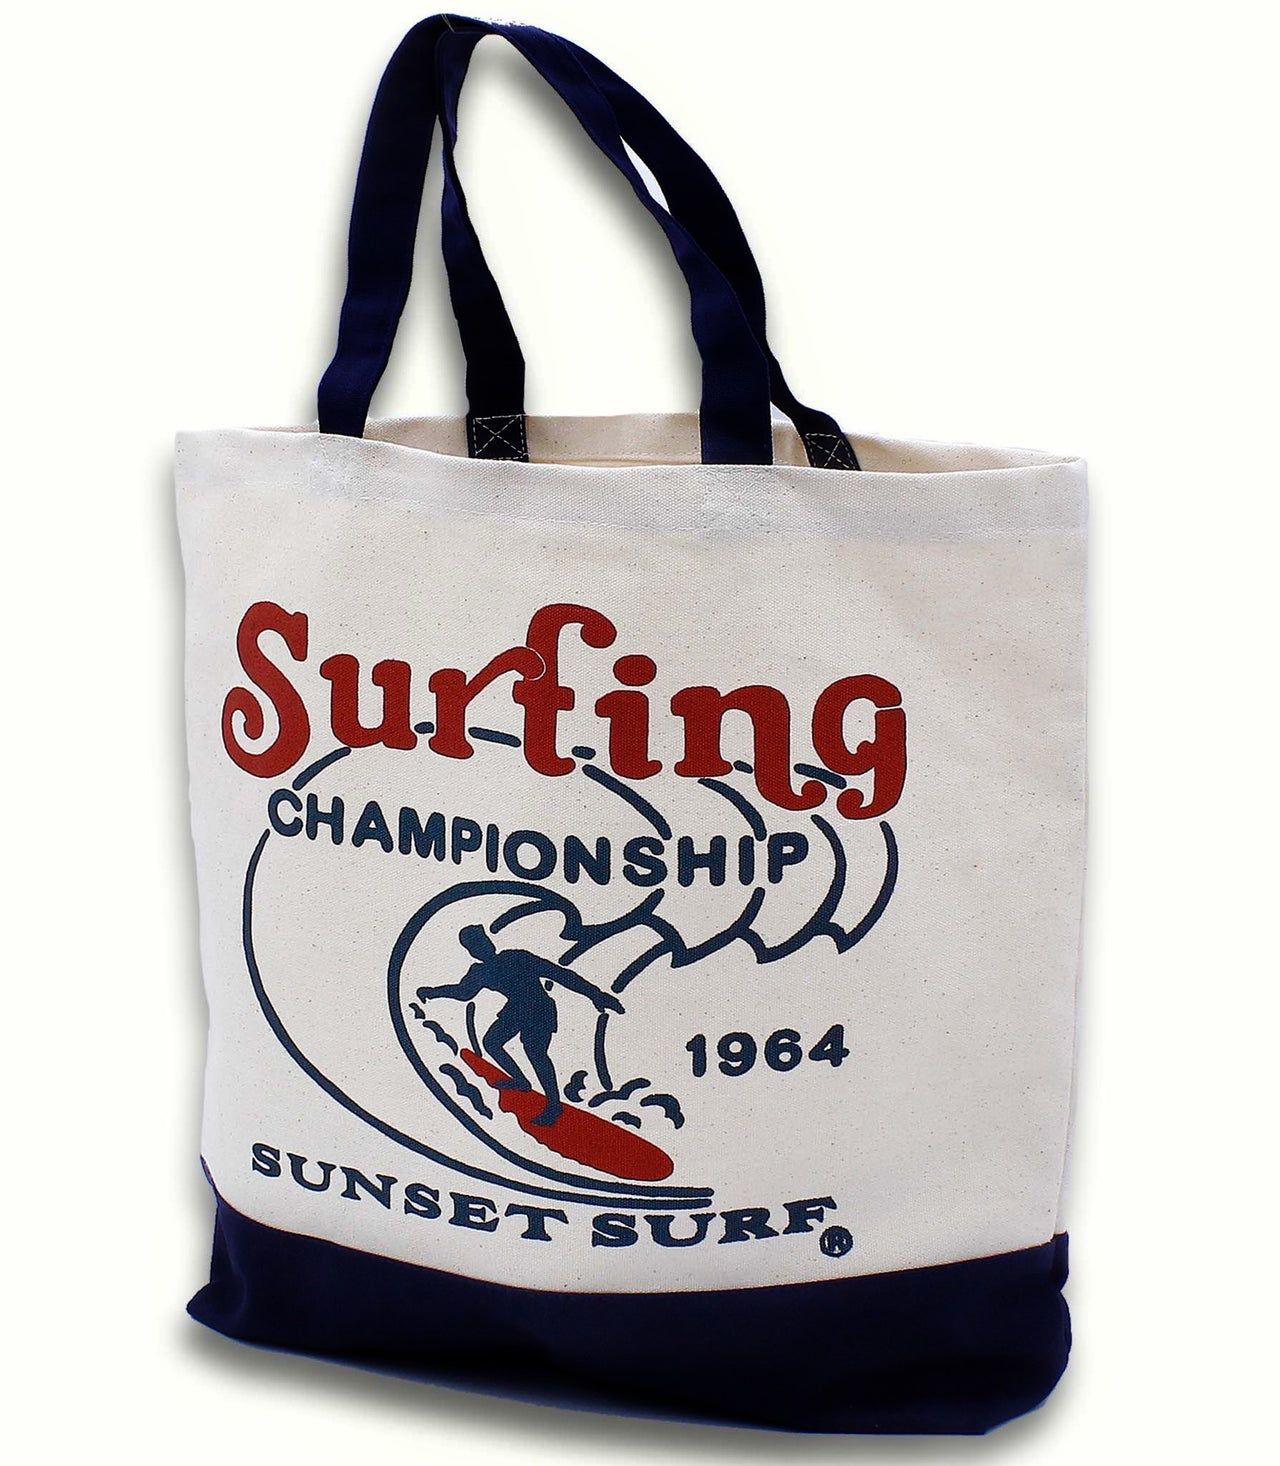 Surfing Championship Tote Bag